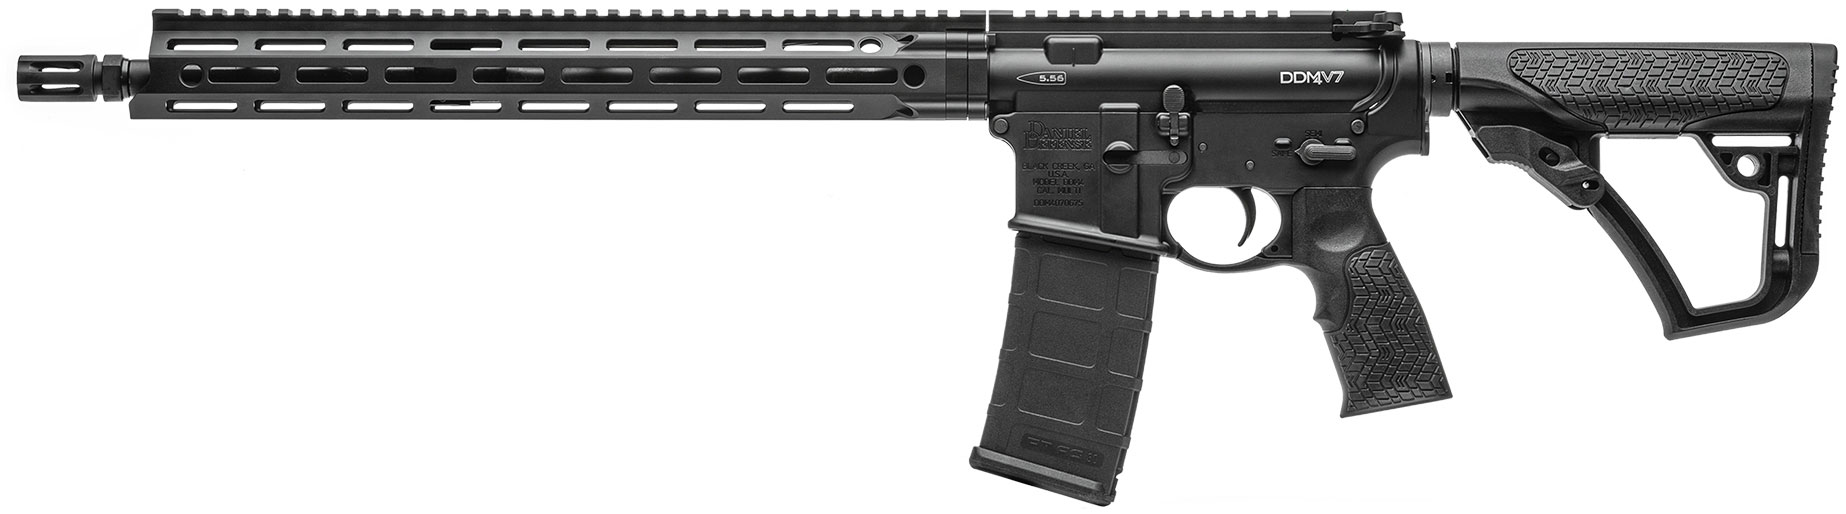 Daniel Defense DDM4 V7 Rifle 0212802081047, 223 Remington/5.56 NATO, 16", Black Stock, Black Finish, 30 Rds